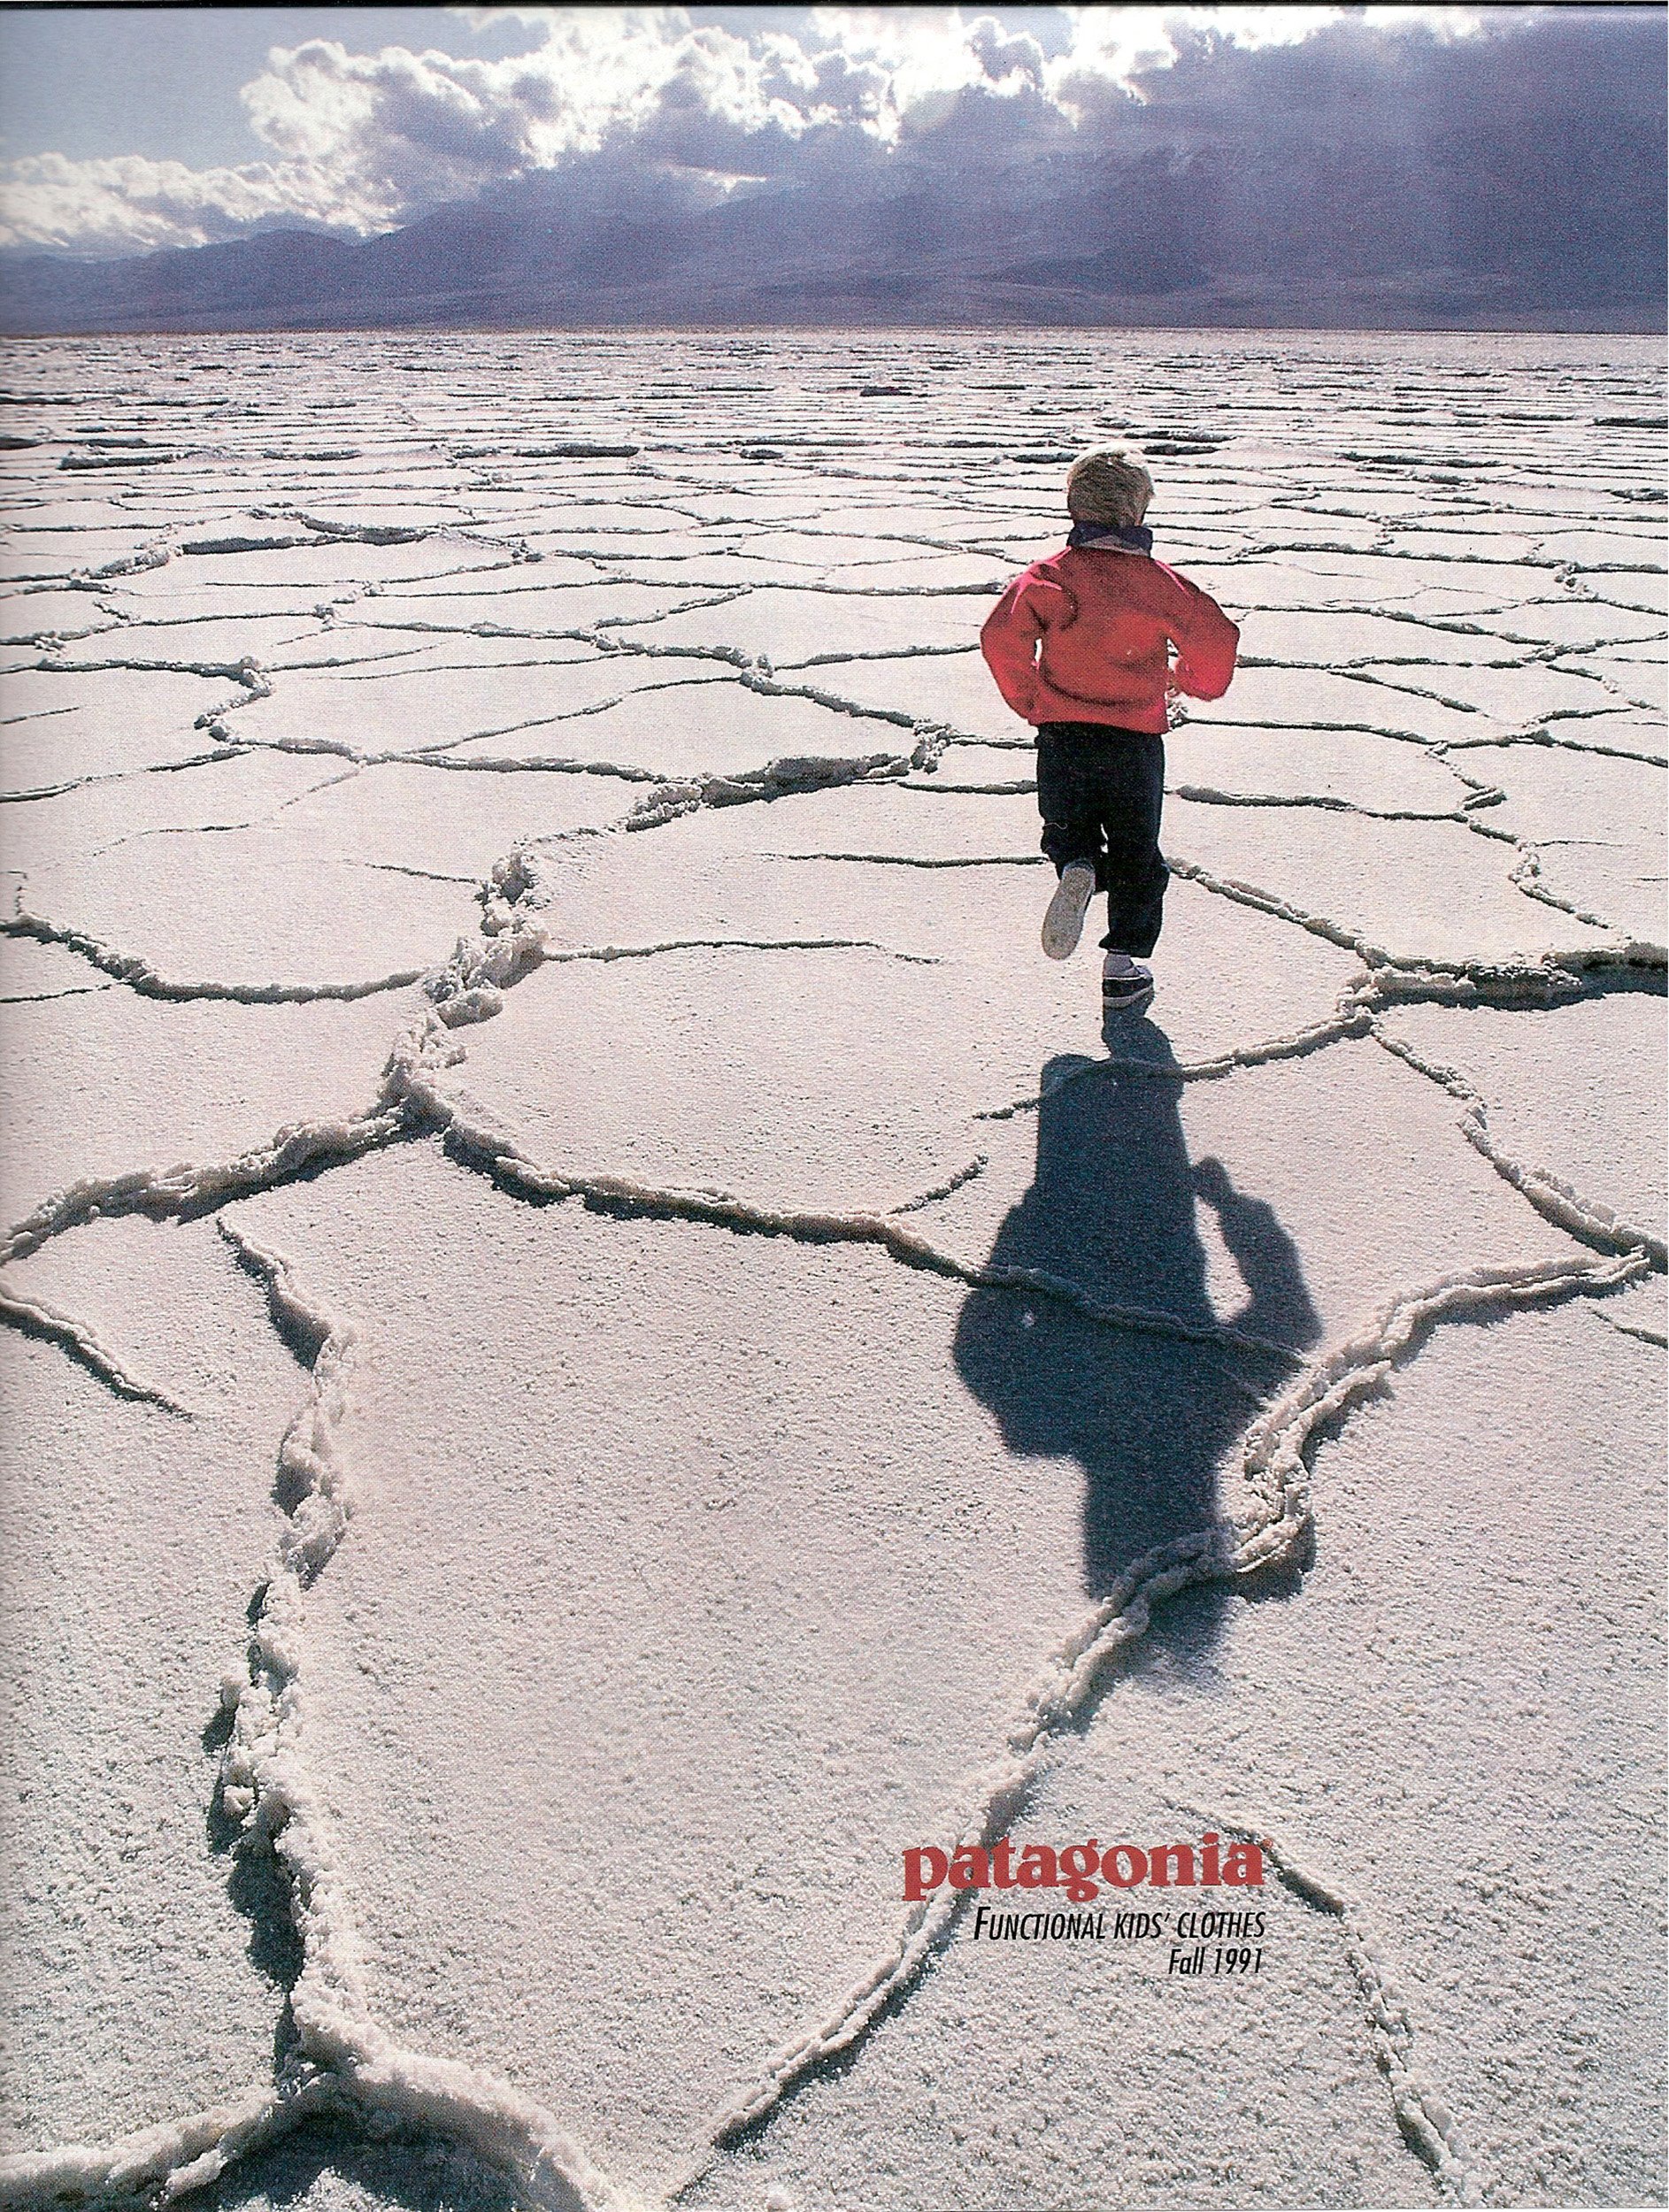 ED Port Patagonia 1991-09 Catalog cover.jpg